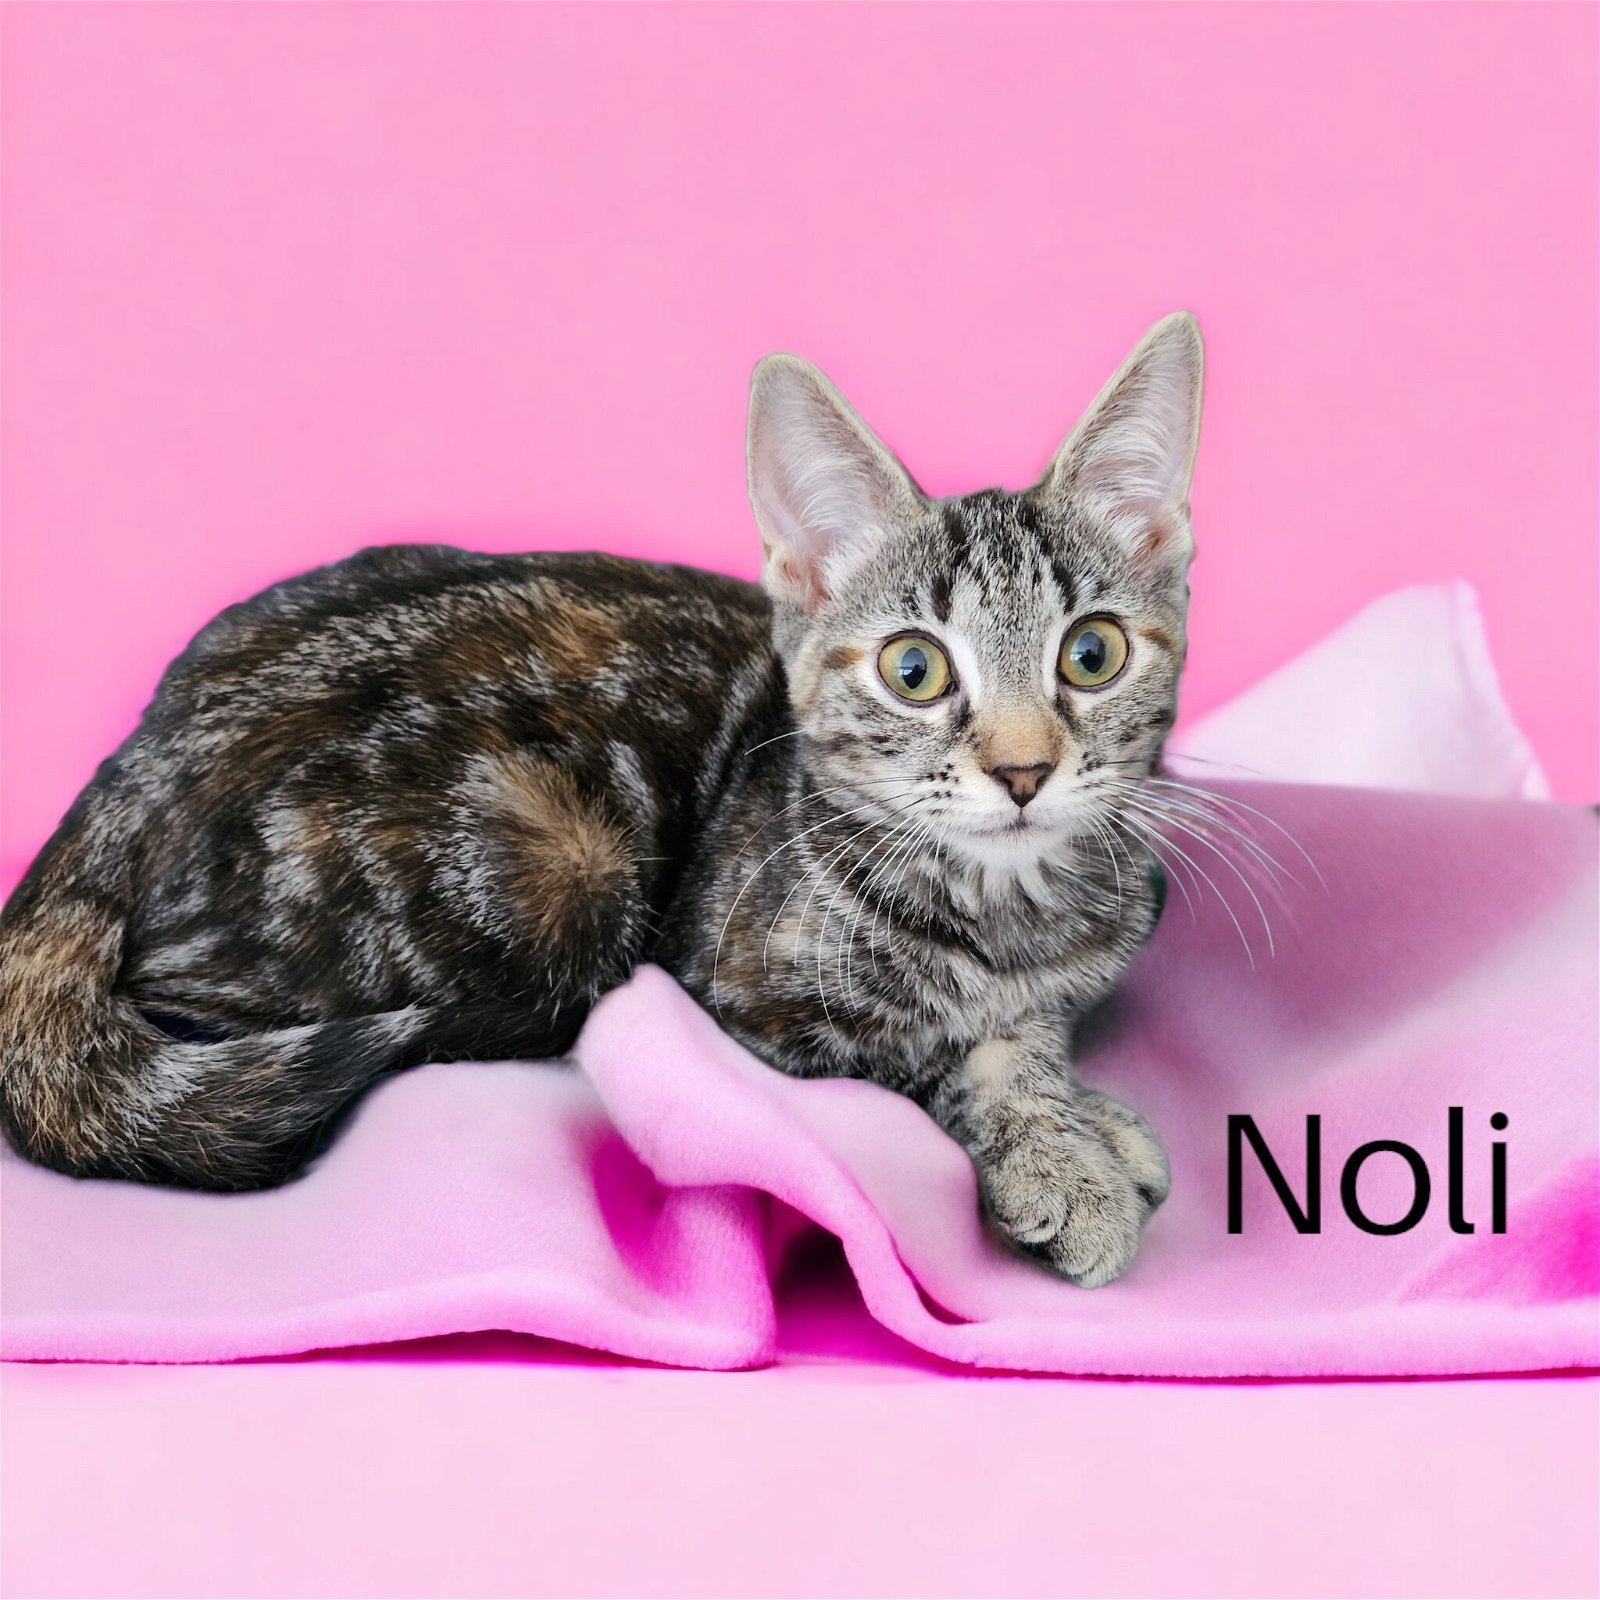 Noli (Connoli)